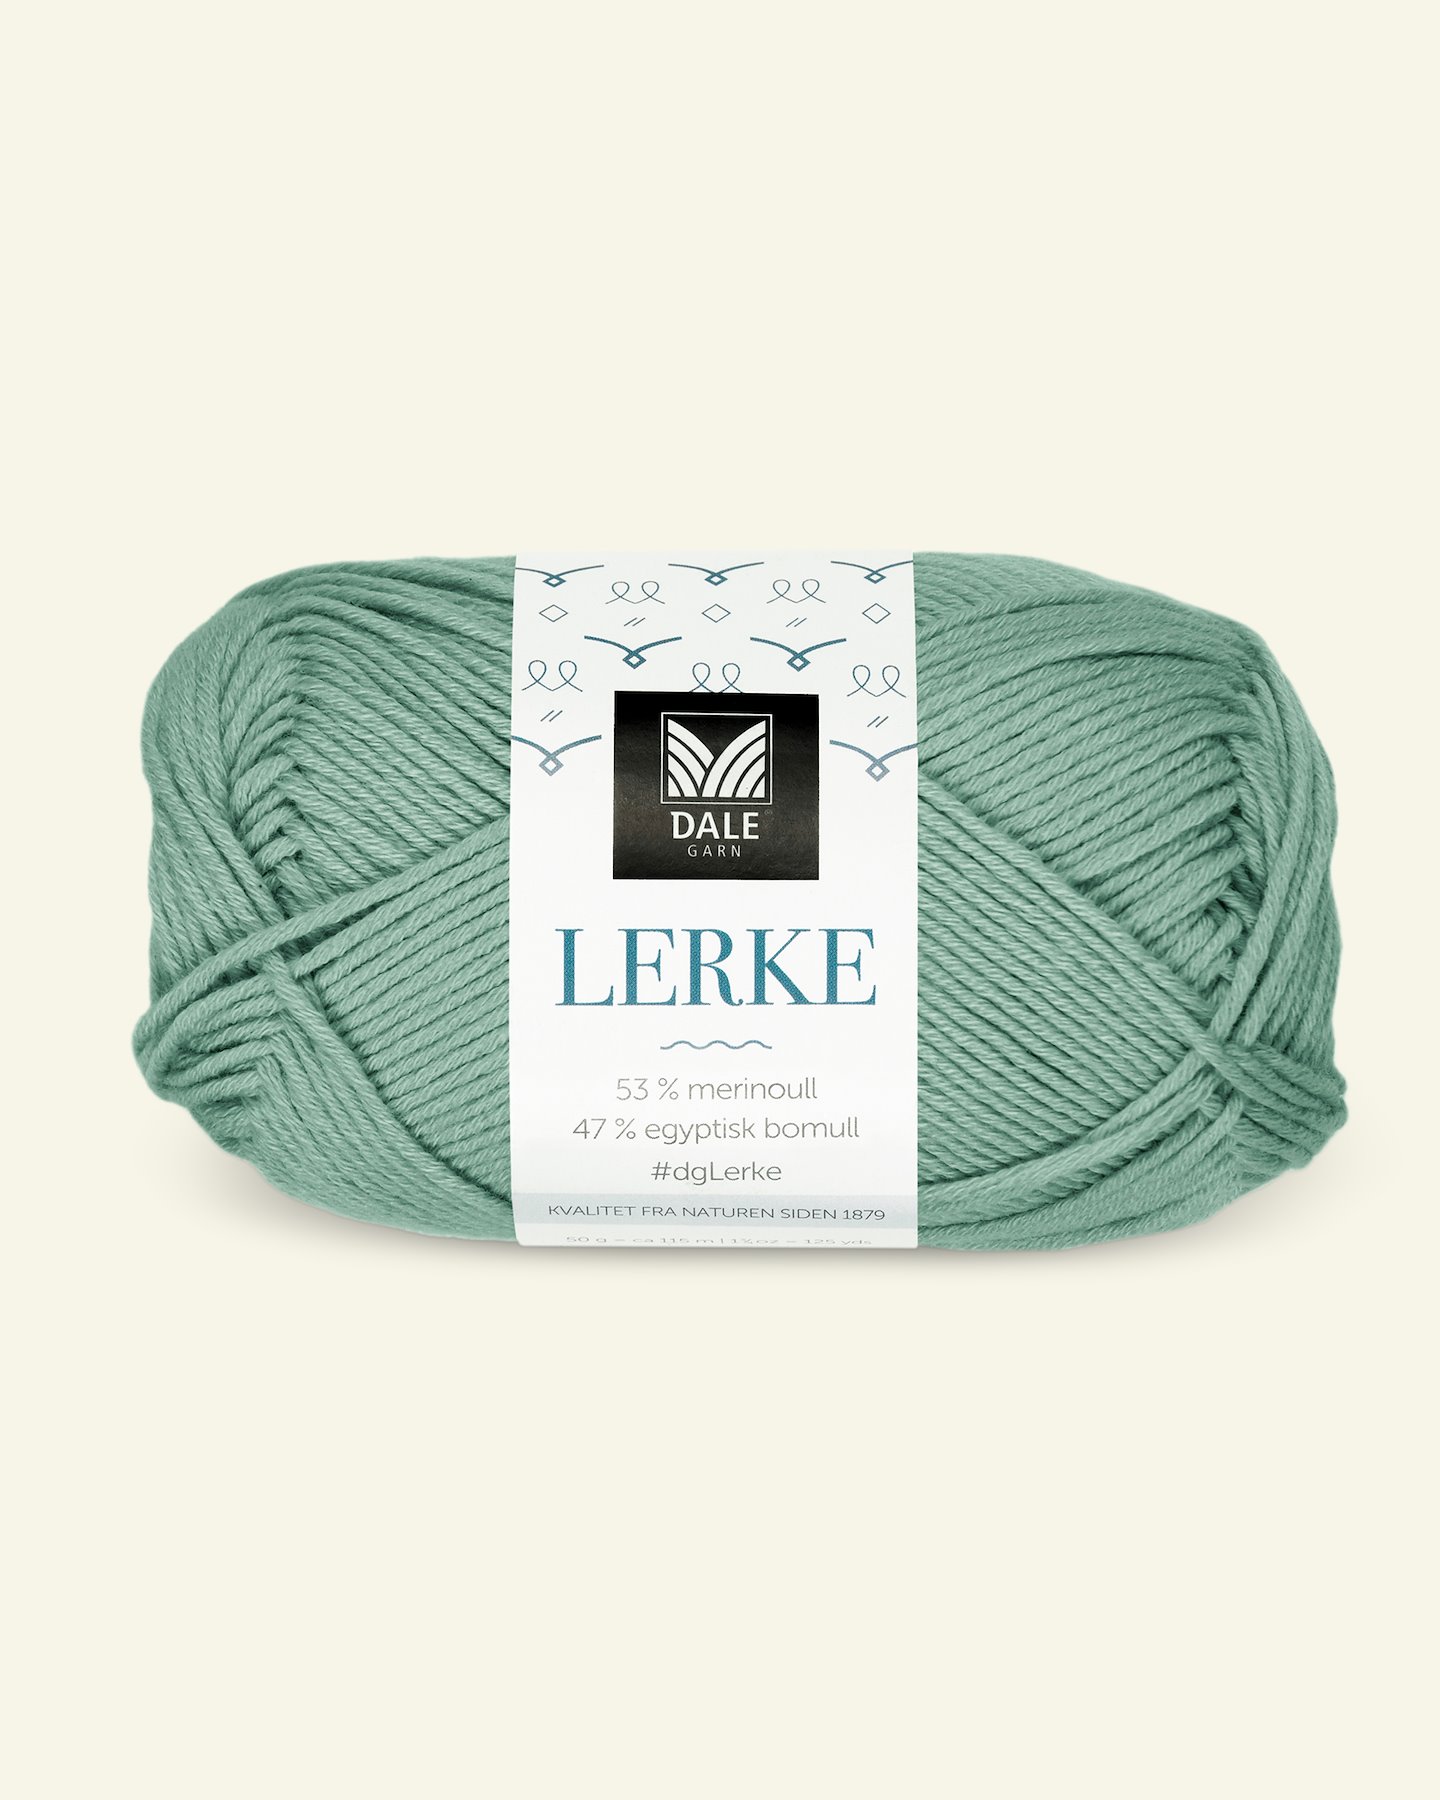 Dale Garn, merino cotton yarn "Lerke", jade green (8101) 90000843_pack